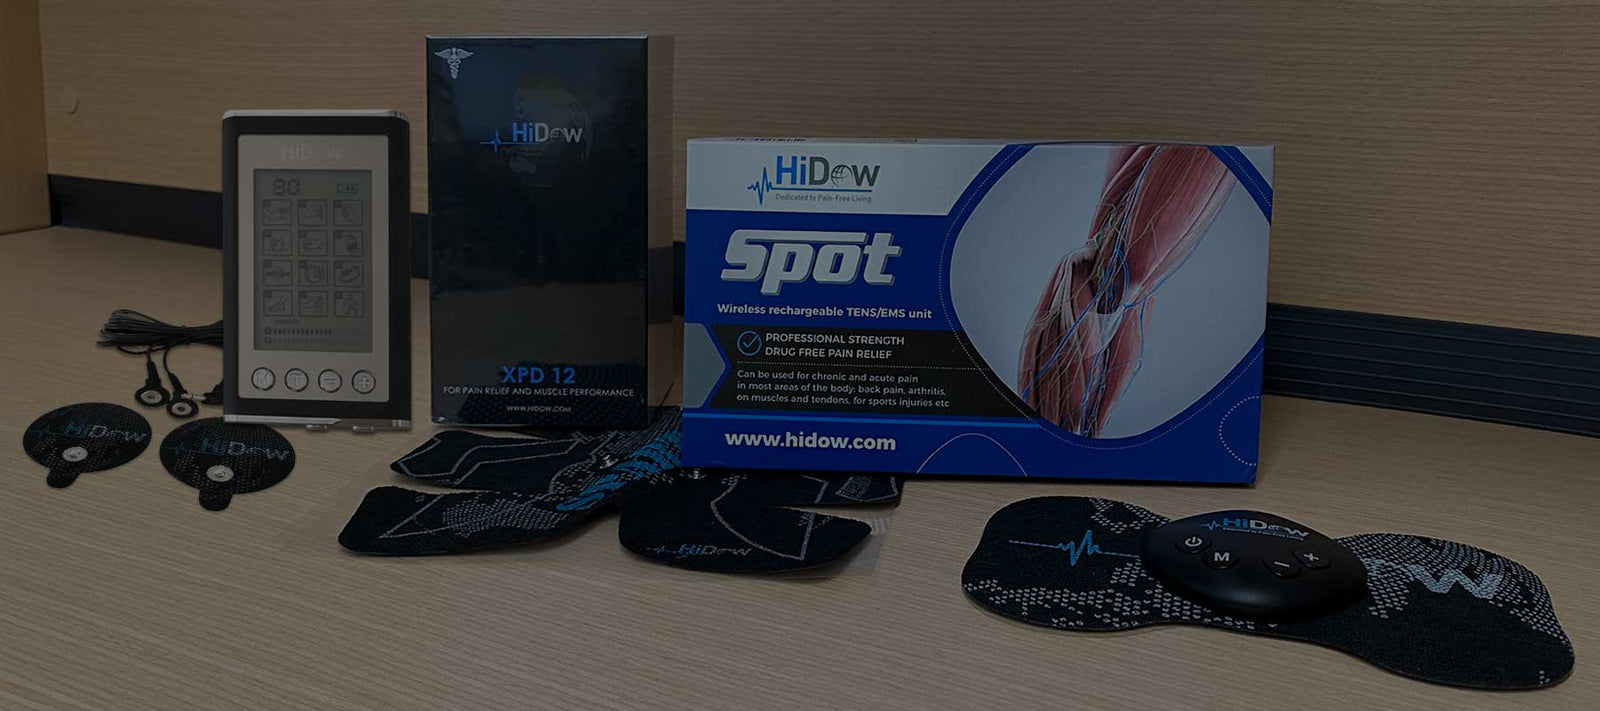 HiDow Spot and XPD12 - WeatherPod